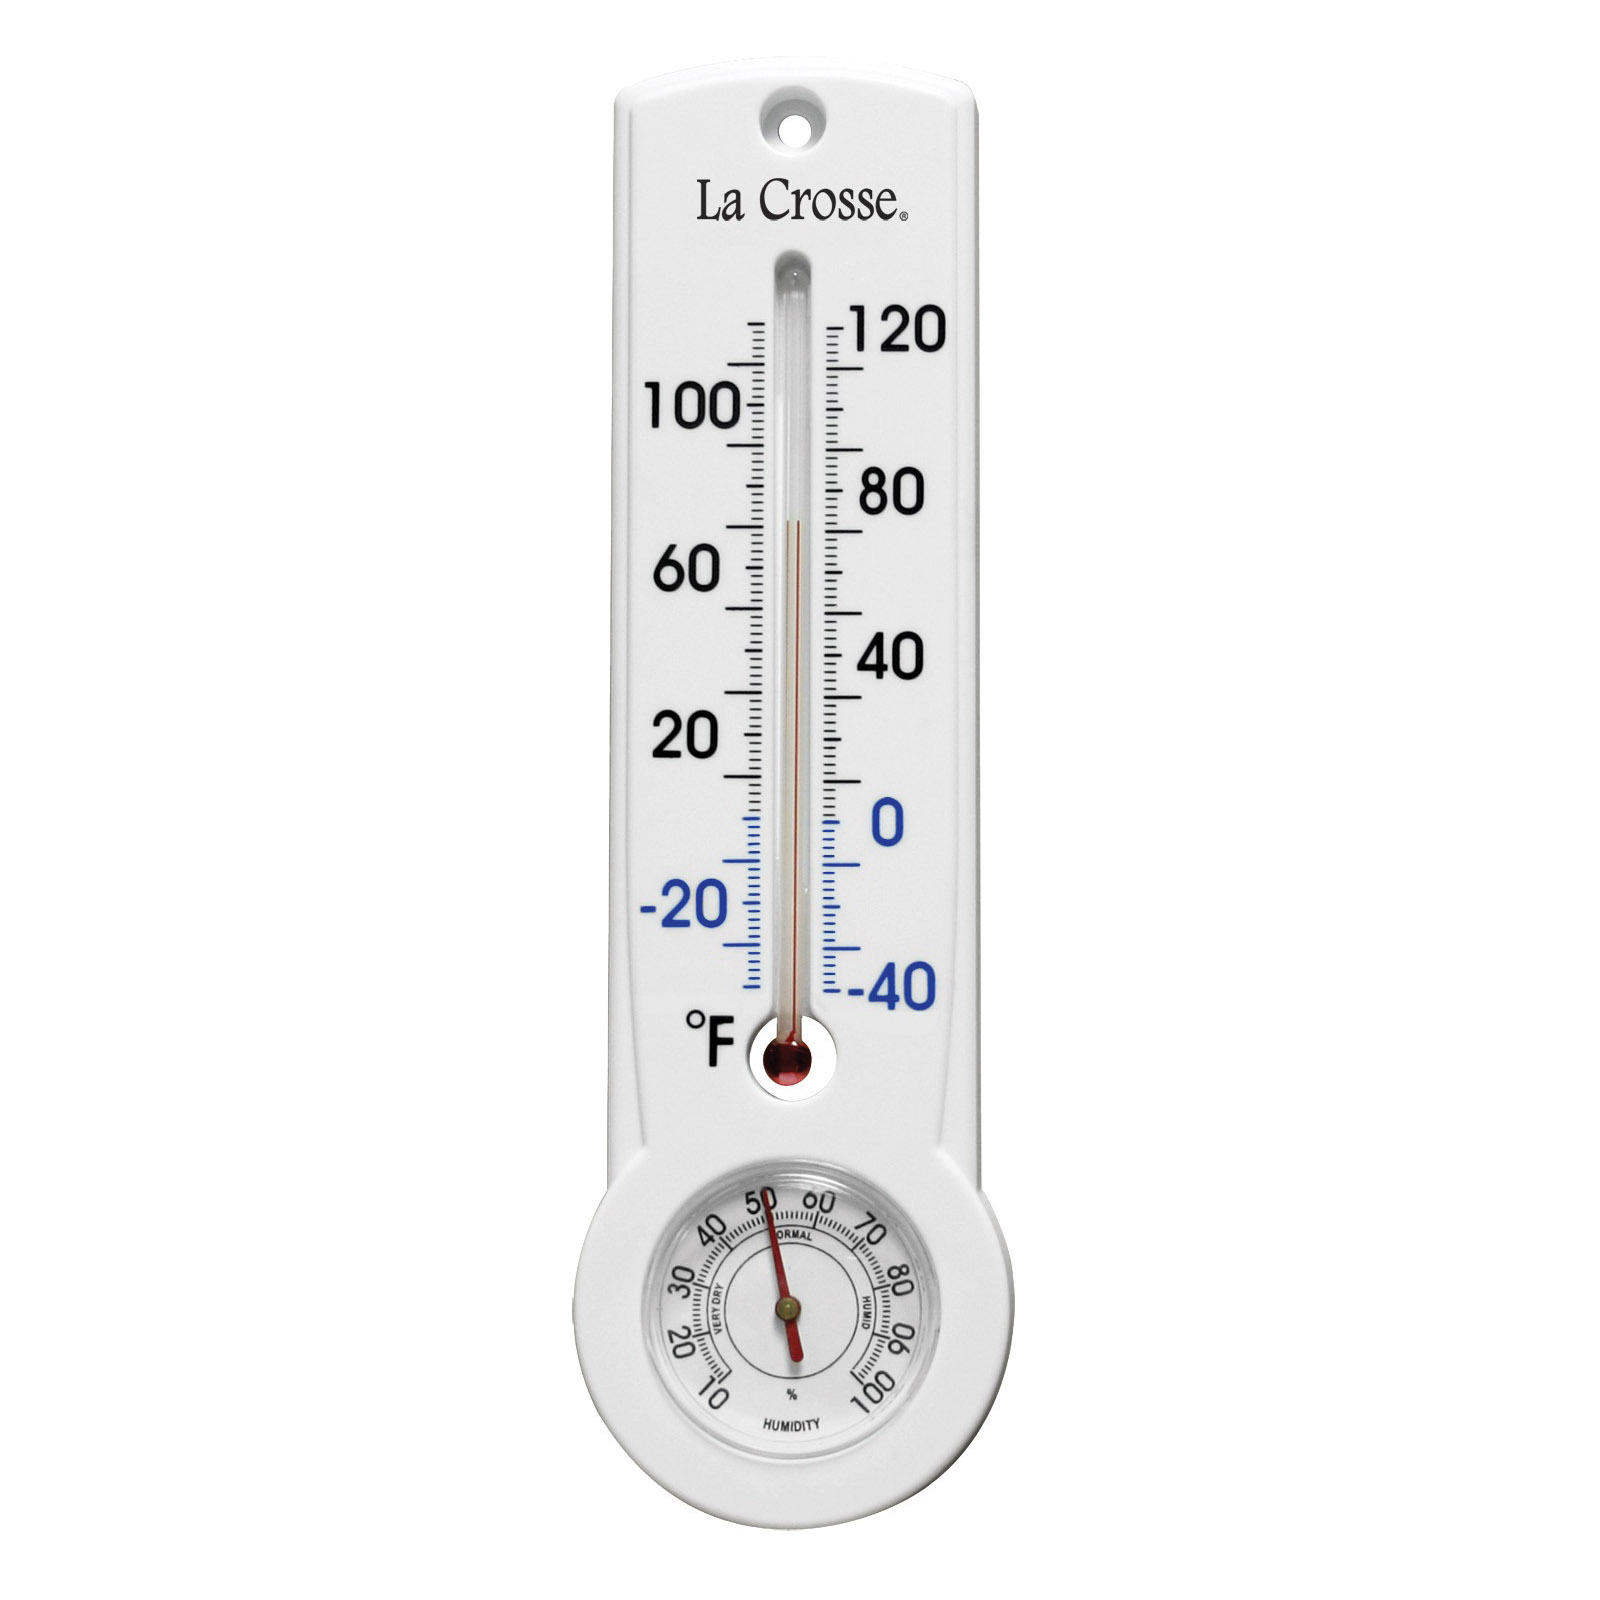 204-109 Thermometer, Analog, -40 to 120 deg F, Plastic Casing